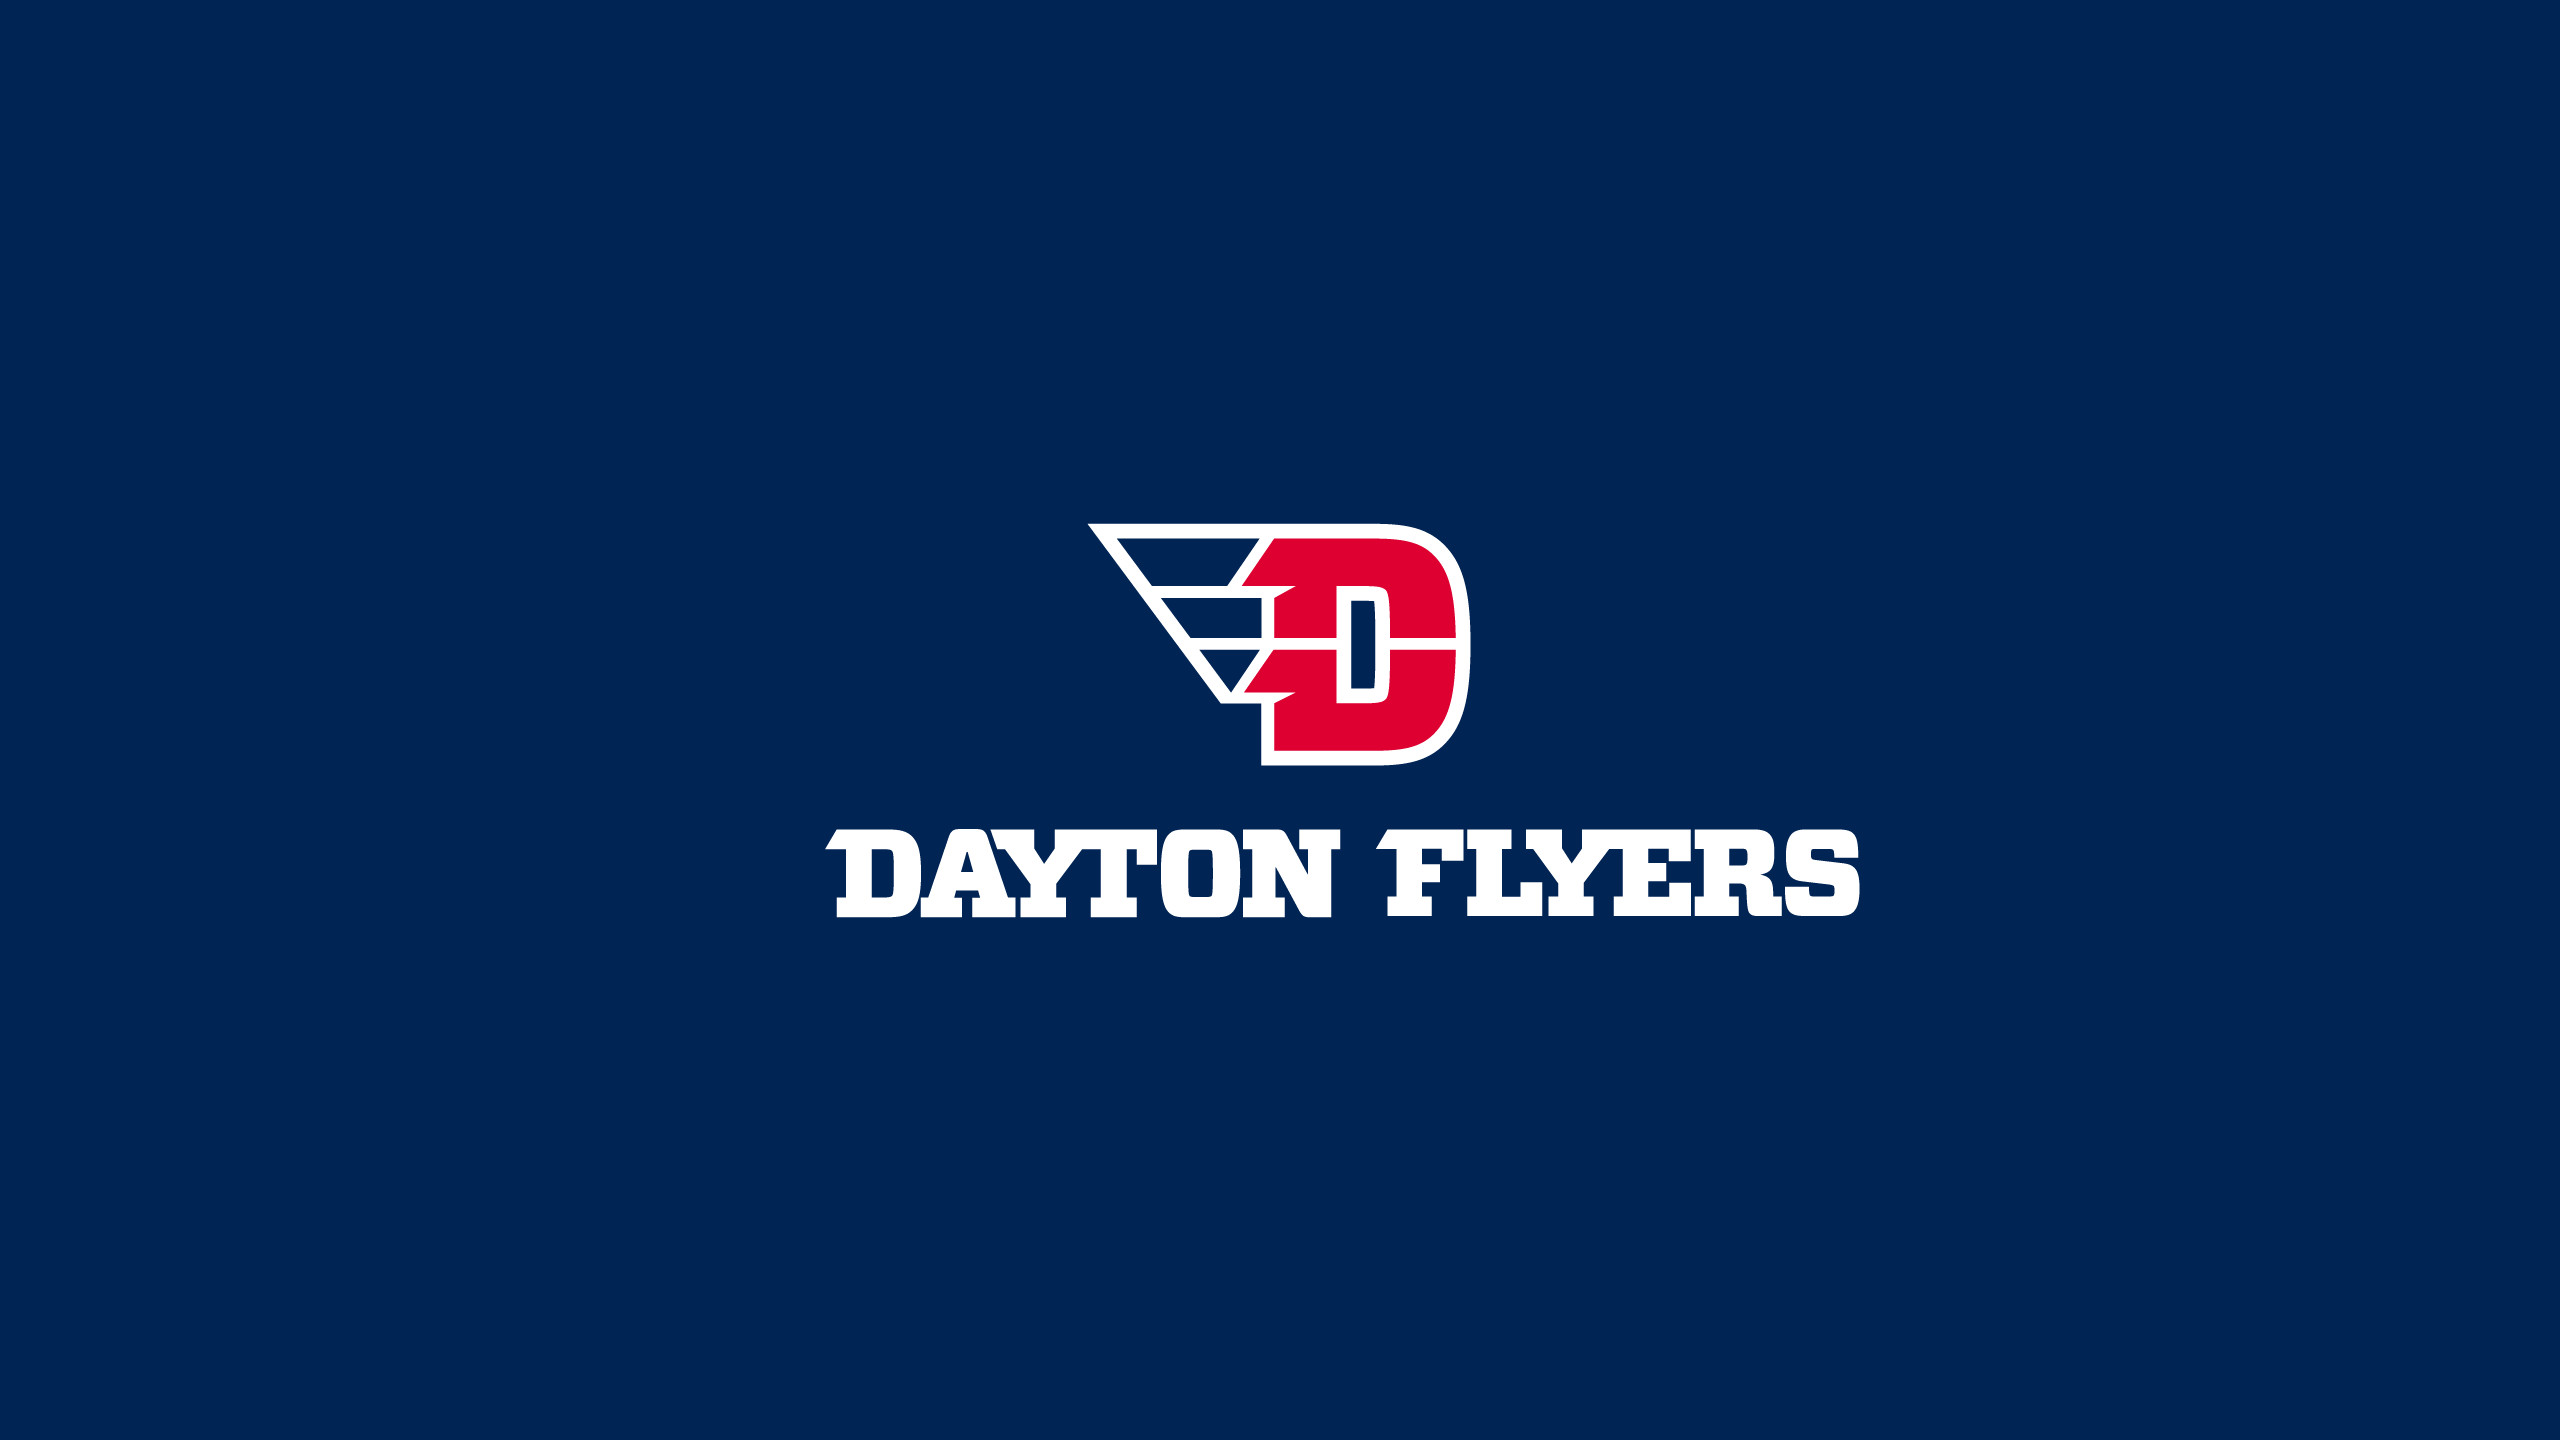 2560x1440 ... Dayton Flyers Wallpapers #49O7B46 ...